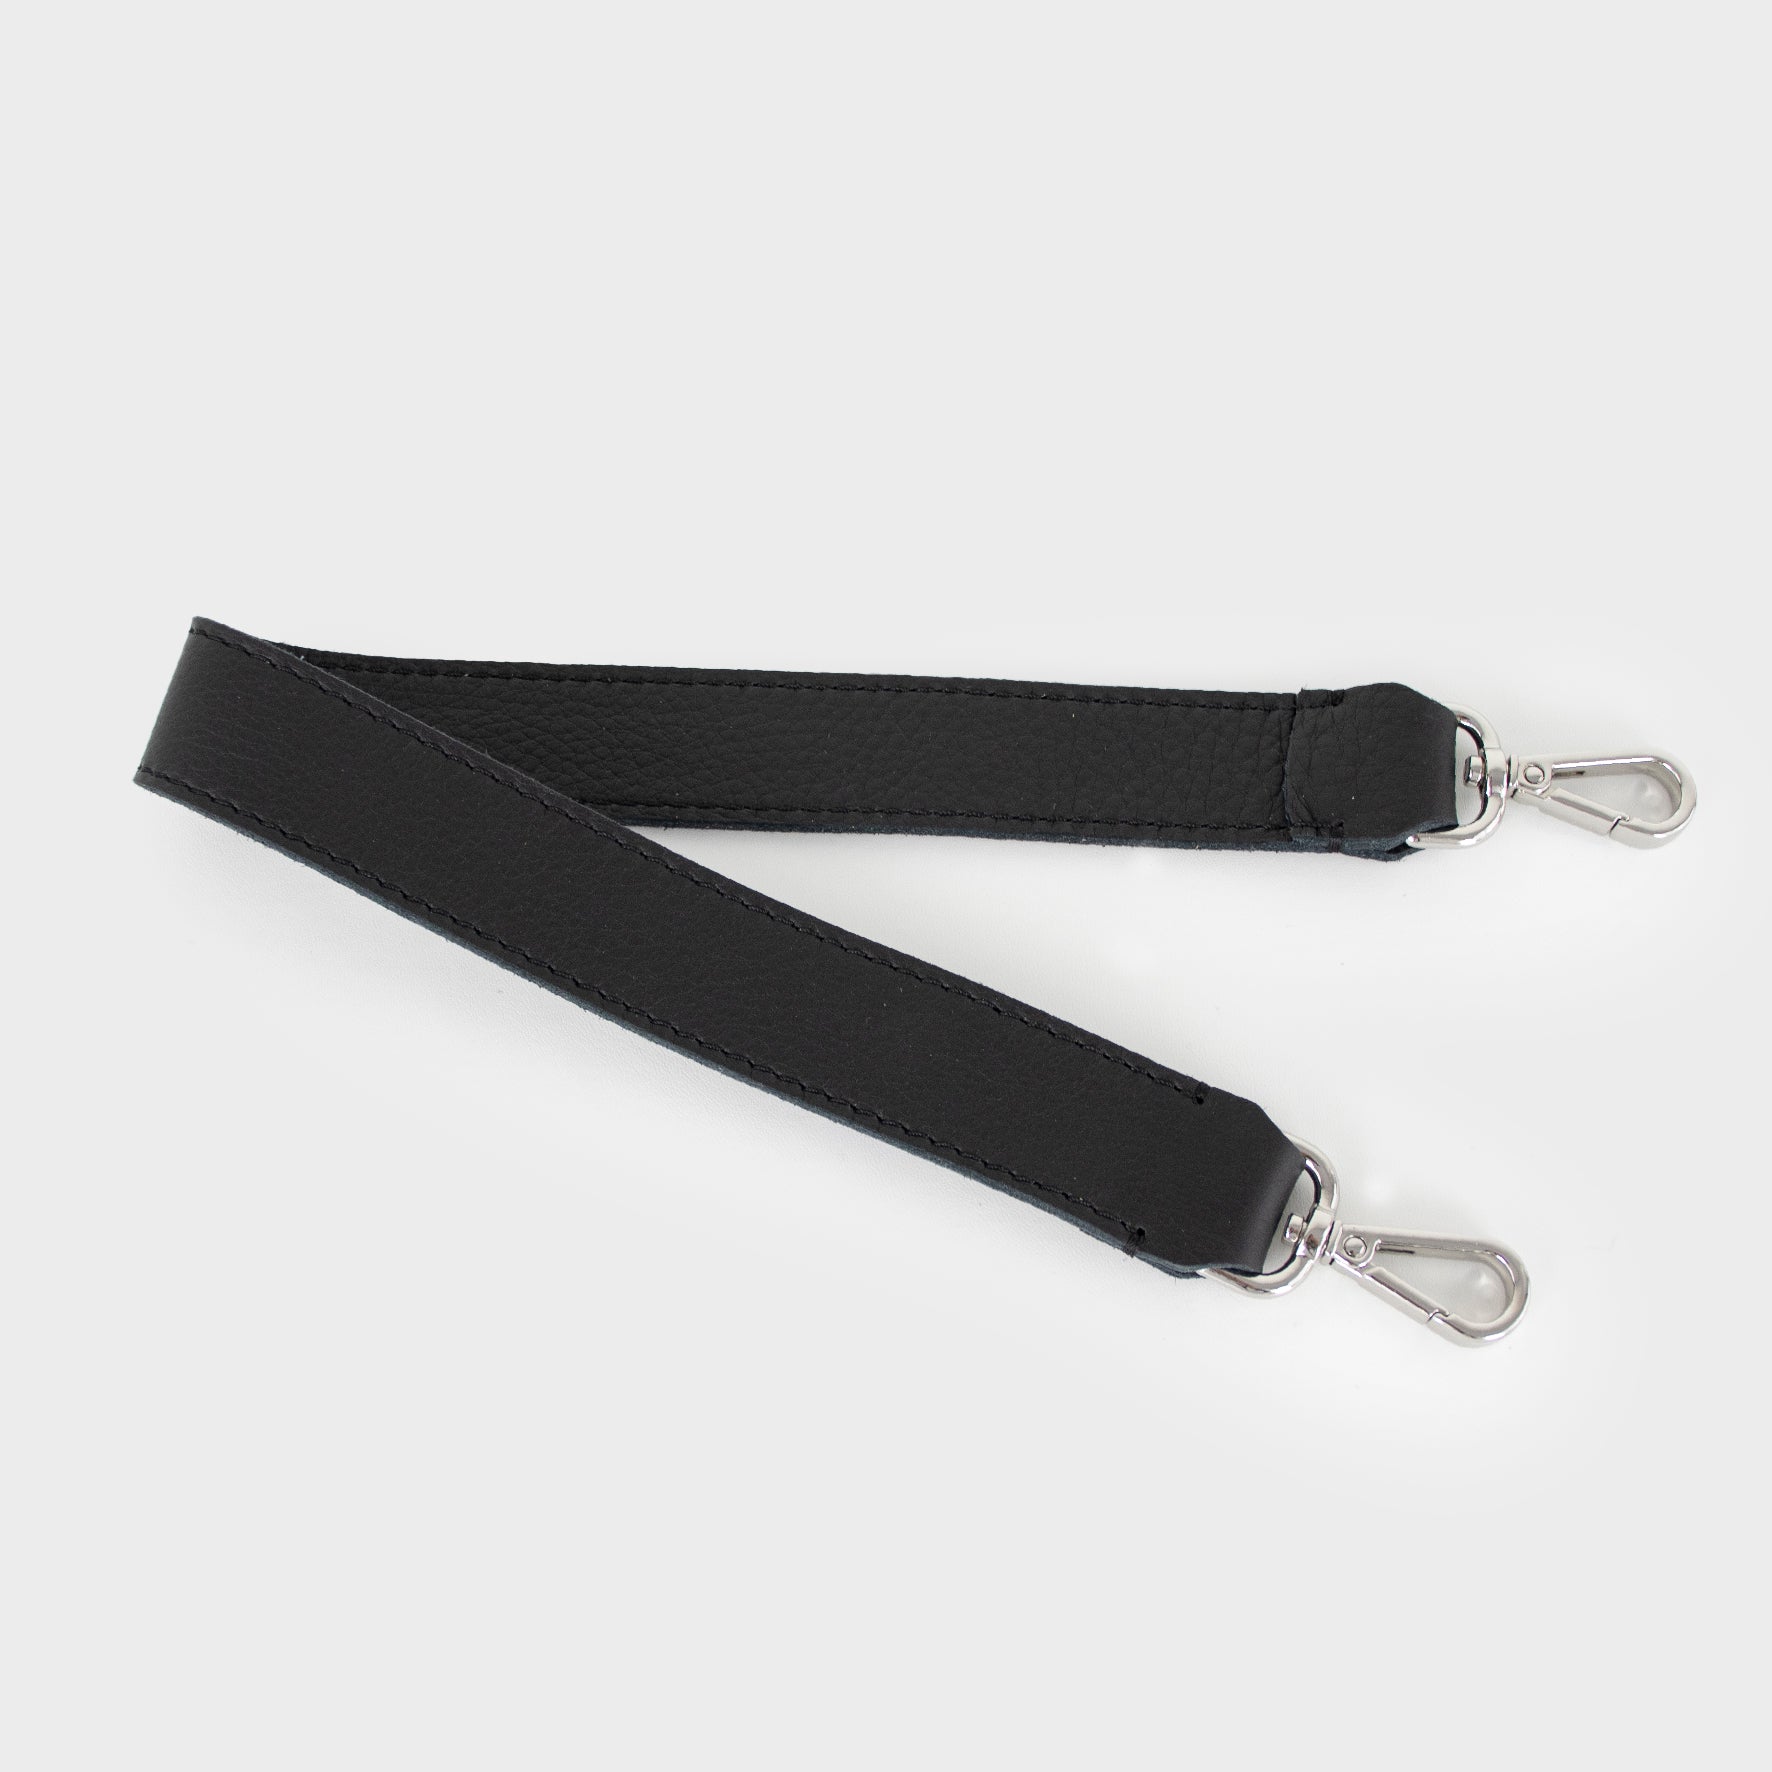 Joy Syna M - Leather Crossbody Bag - Black